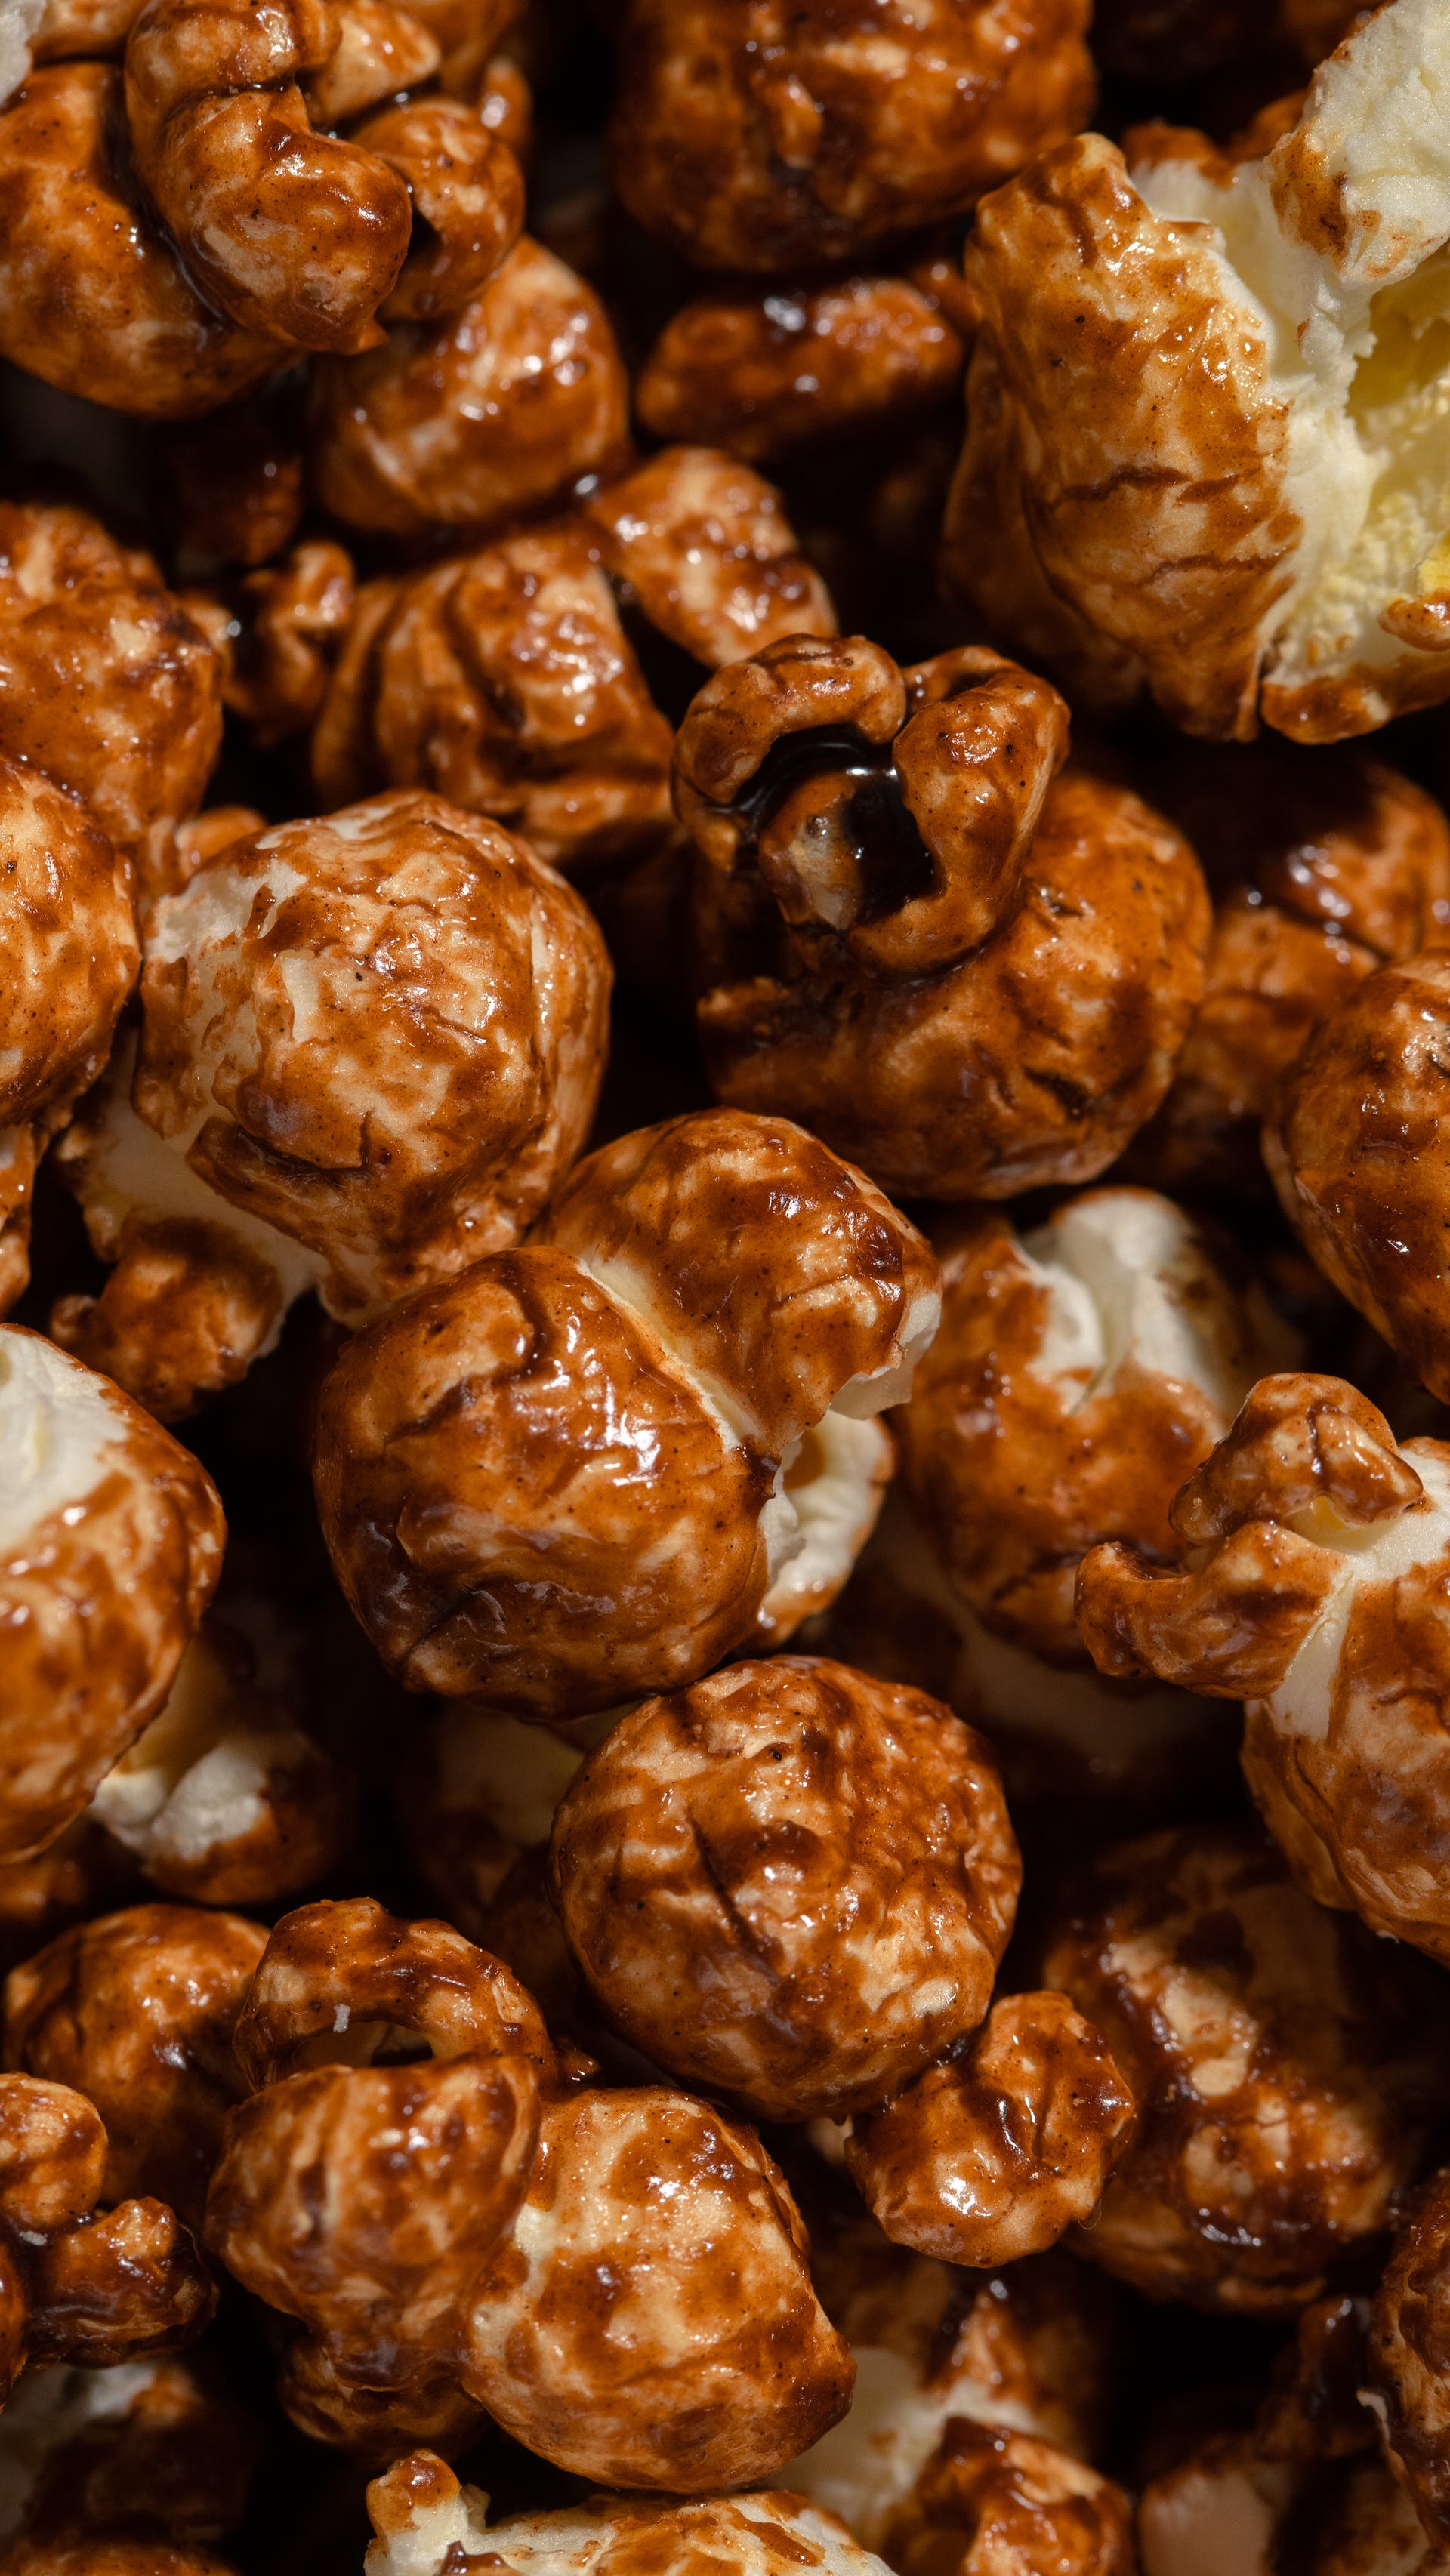 Caramel popcorn | Source: Pexels